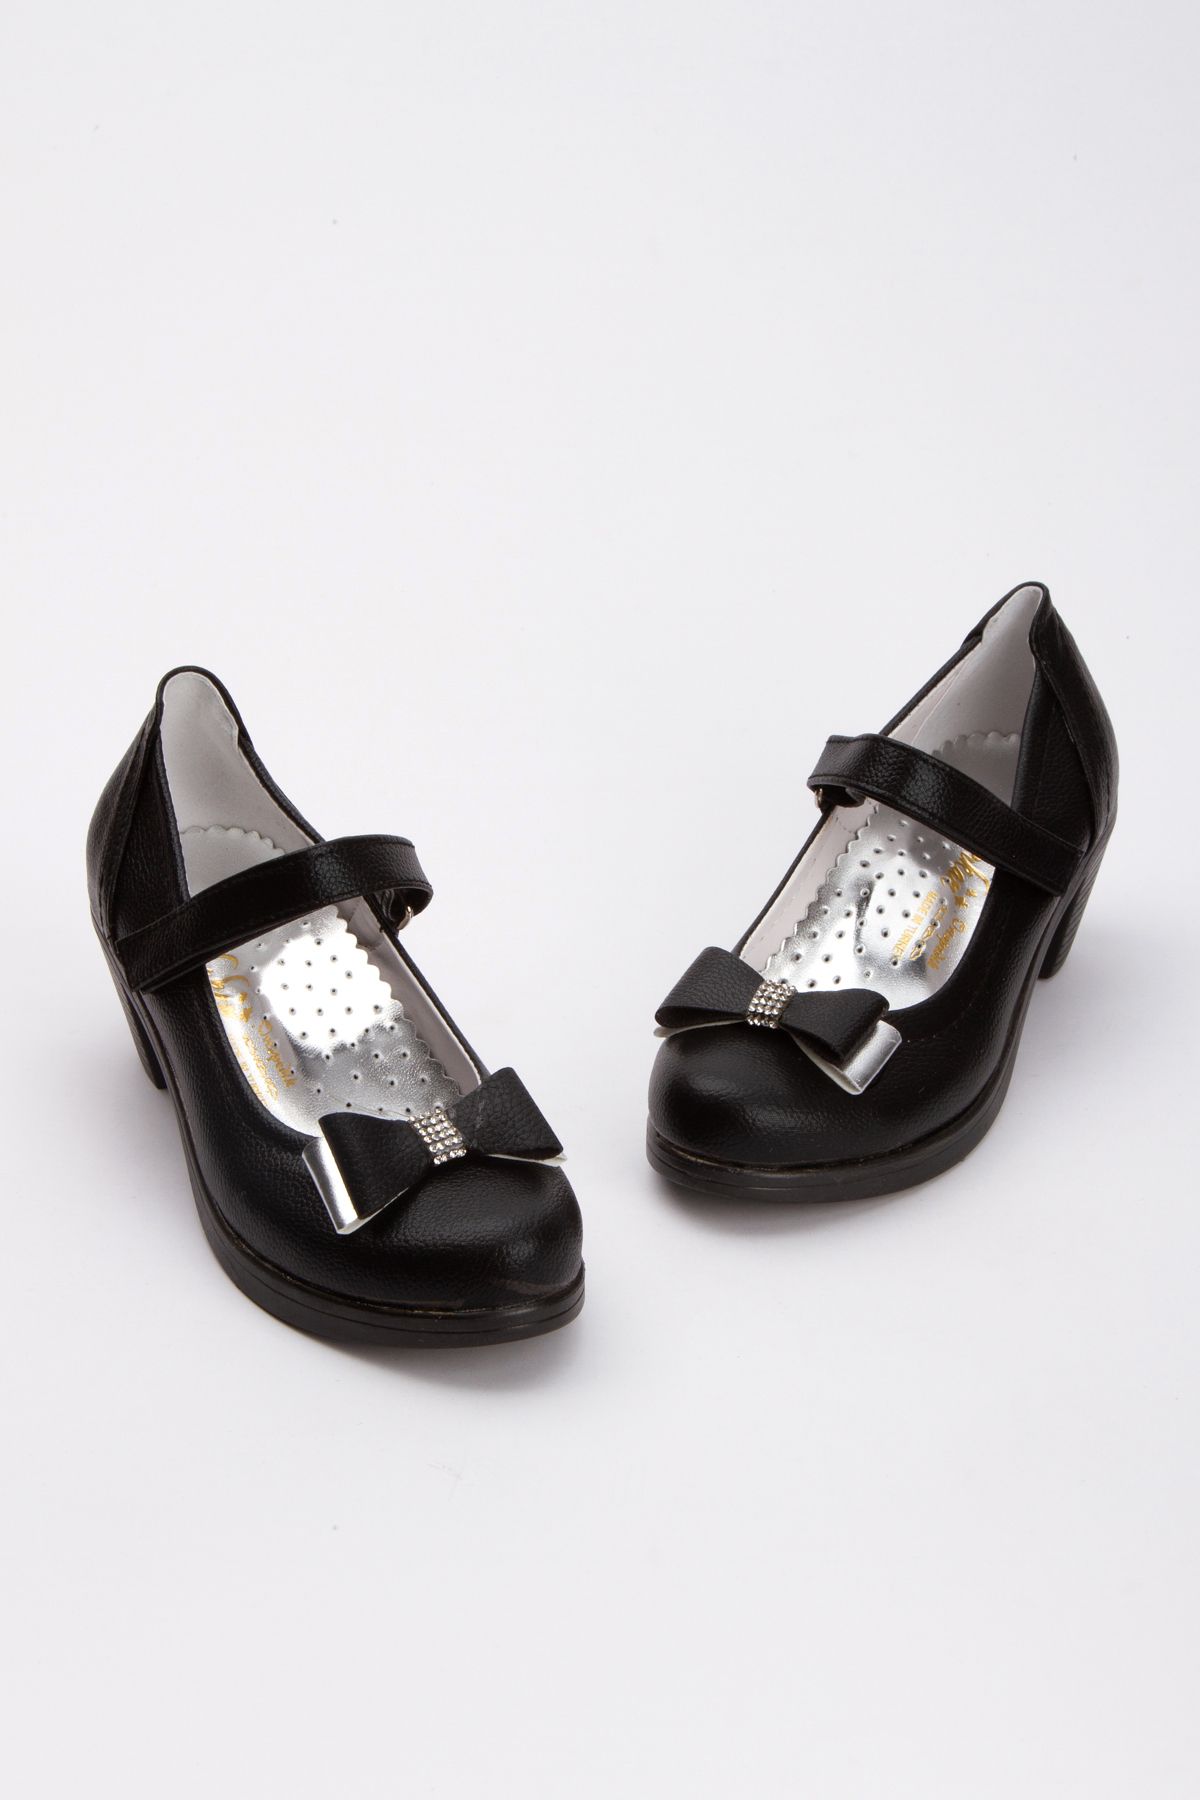 Sare Çocuk Giyim Siyah Kız Çocuk Topuklu Gösteri Ayakkabısı